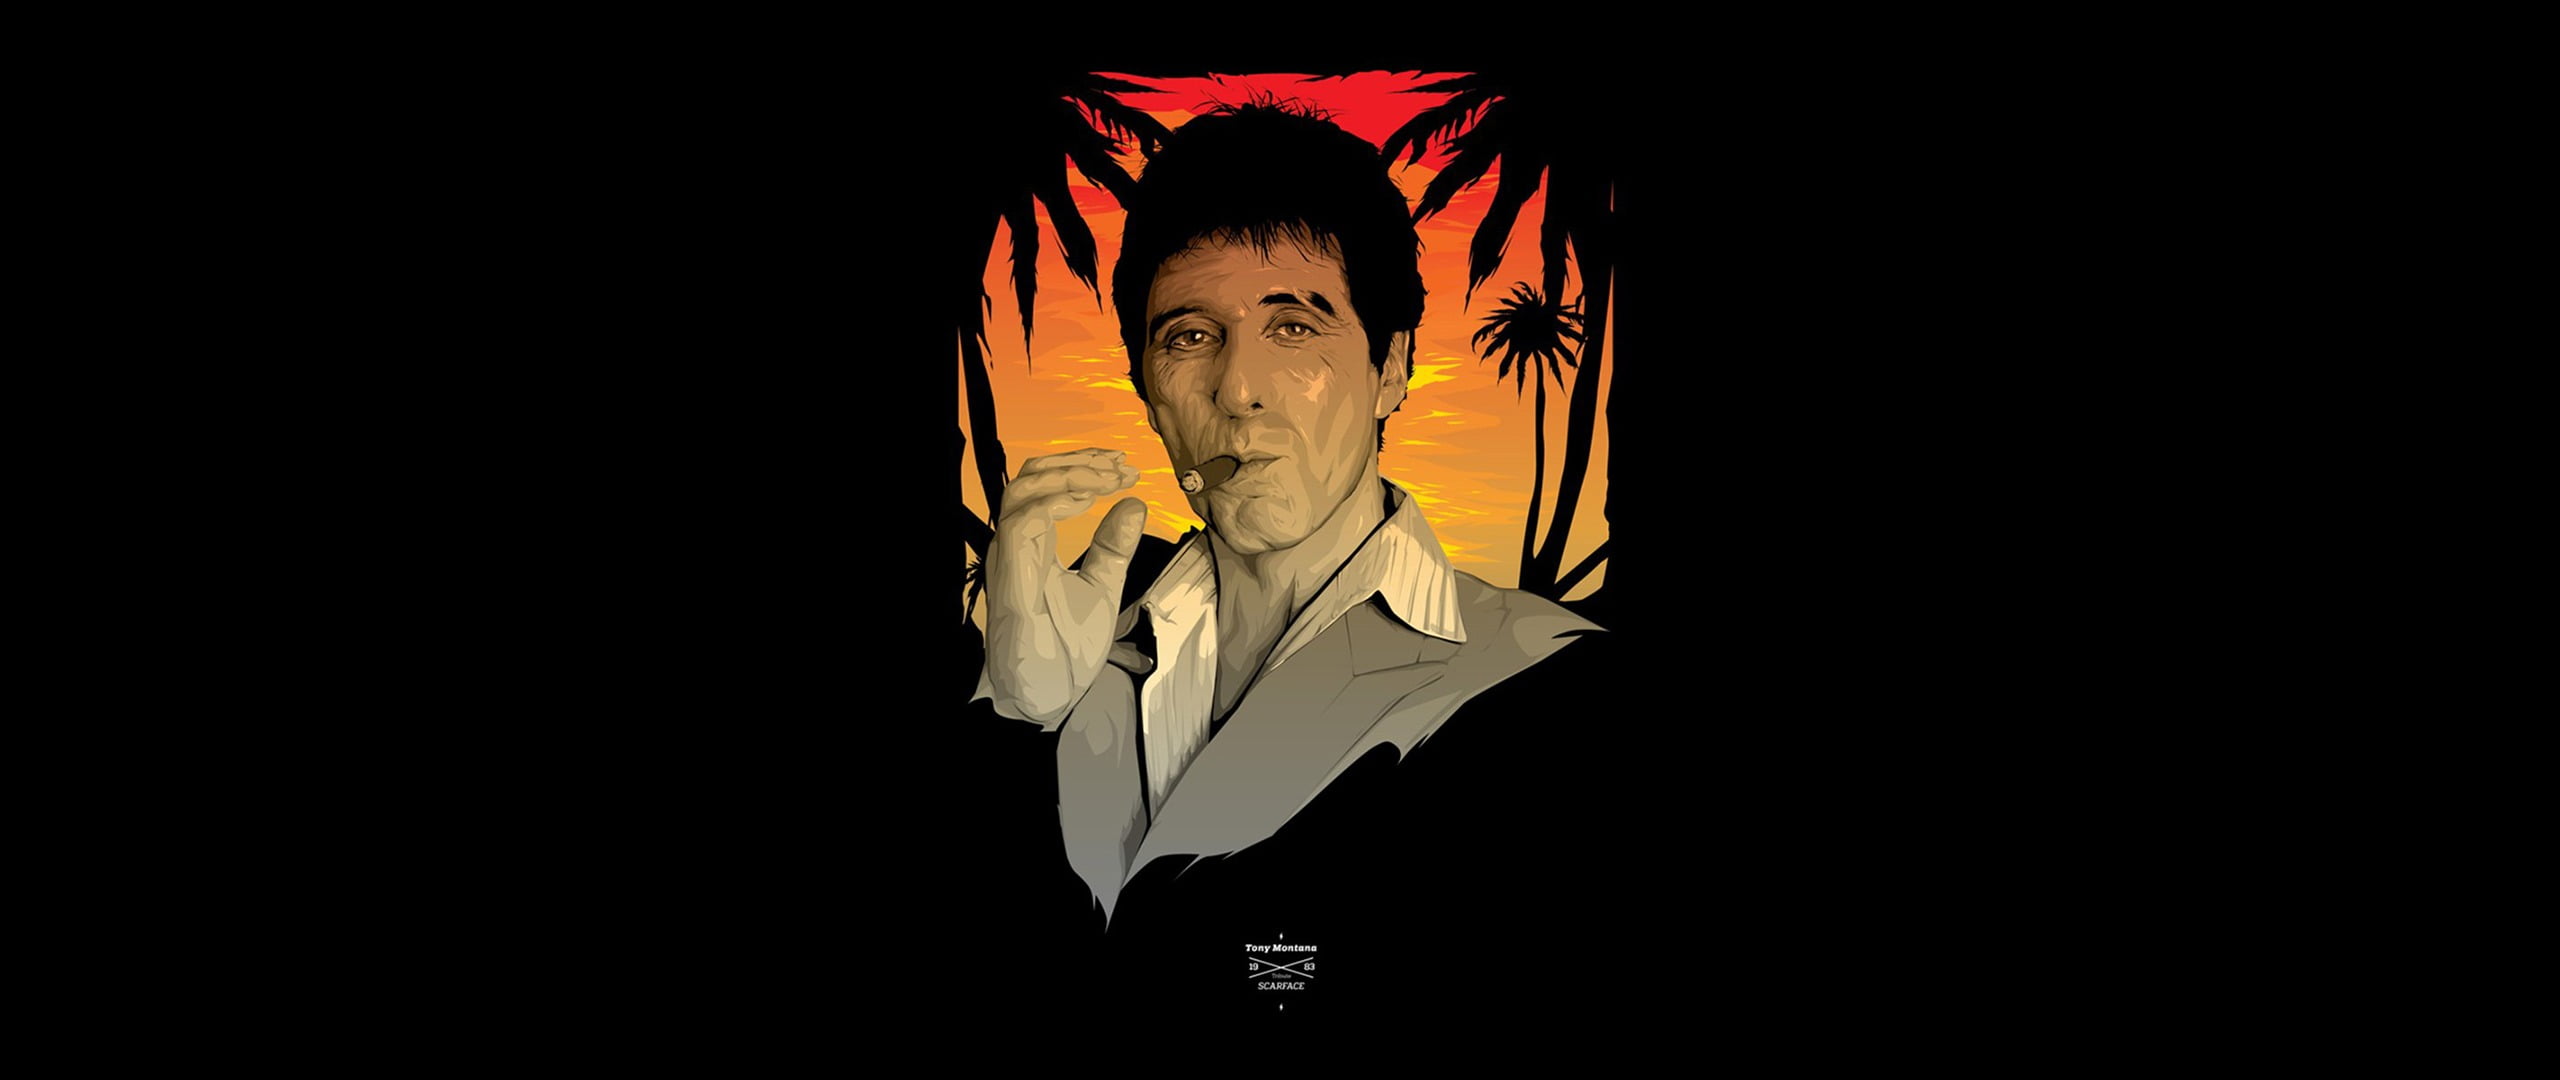 Al Pacino wallpaper, ultra-wide, Scarface, Tony Montana, one person